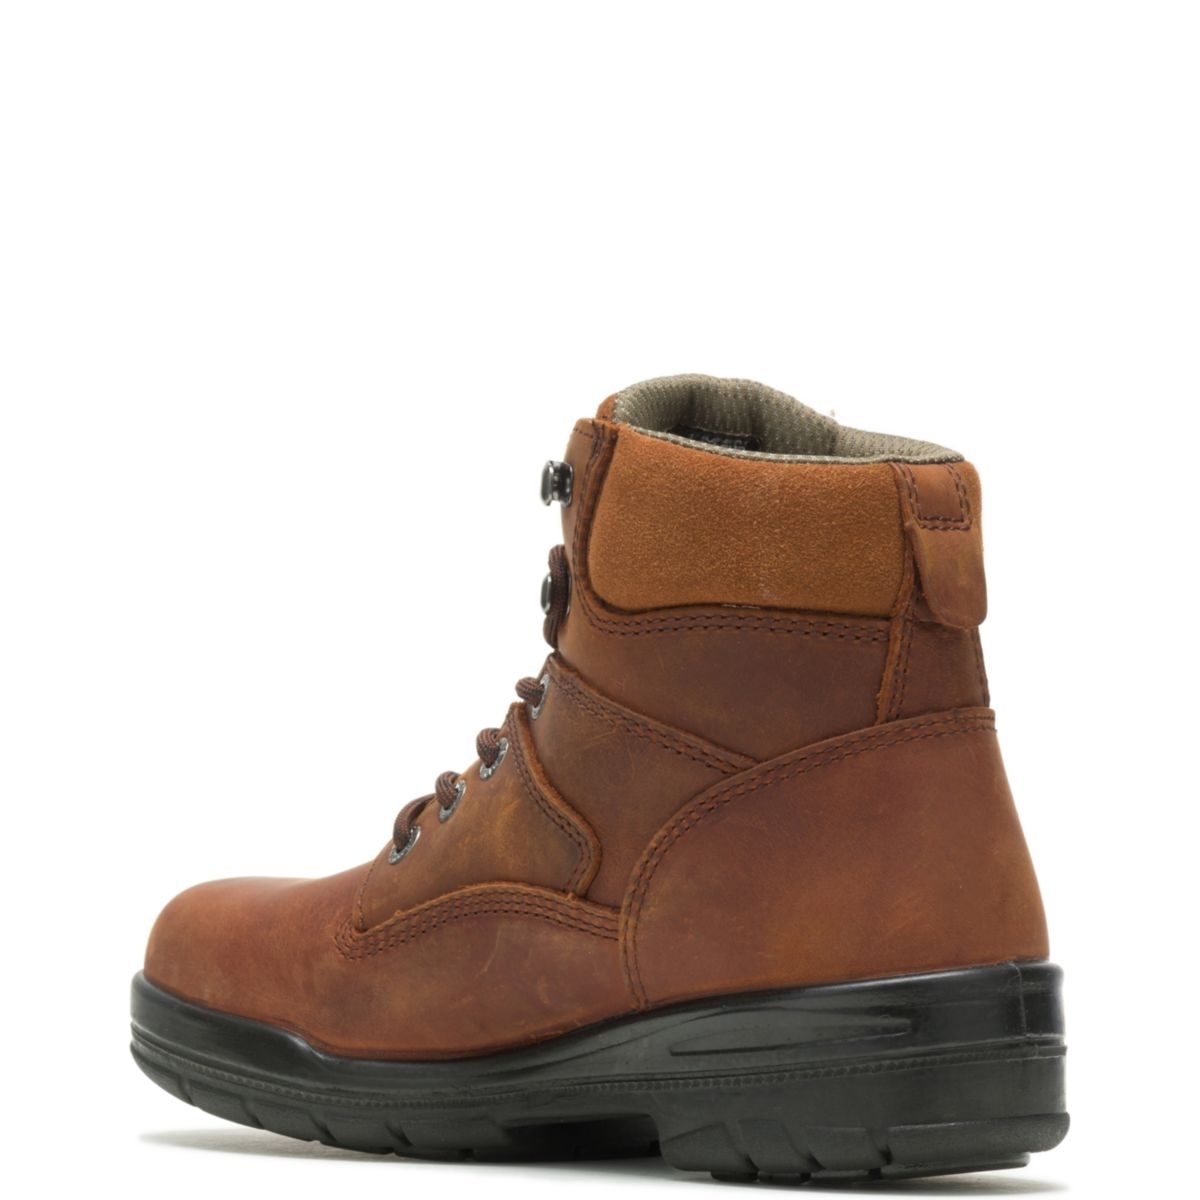 WOLVERINE Men's 6 DuraShocksÂ® Slip Resistant Steel Toe Work Boot Canyon - W02053 BRN/STL - BRN/STL, 9-M